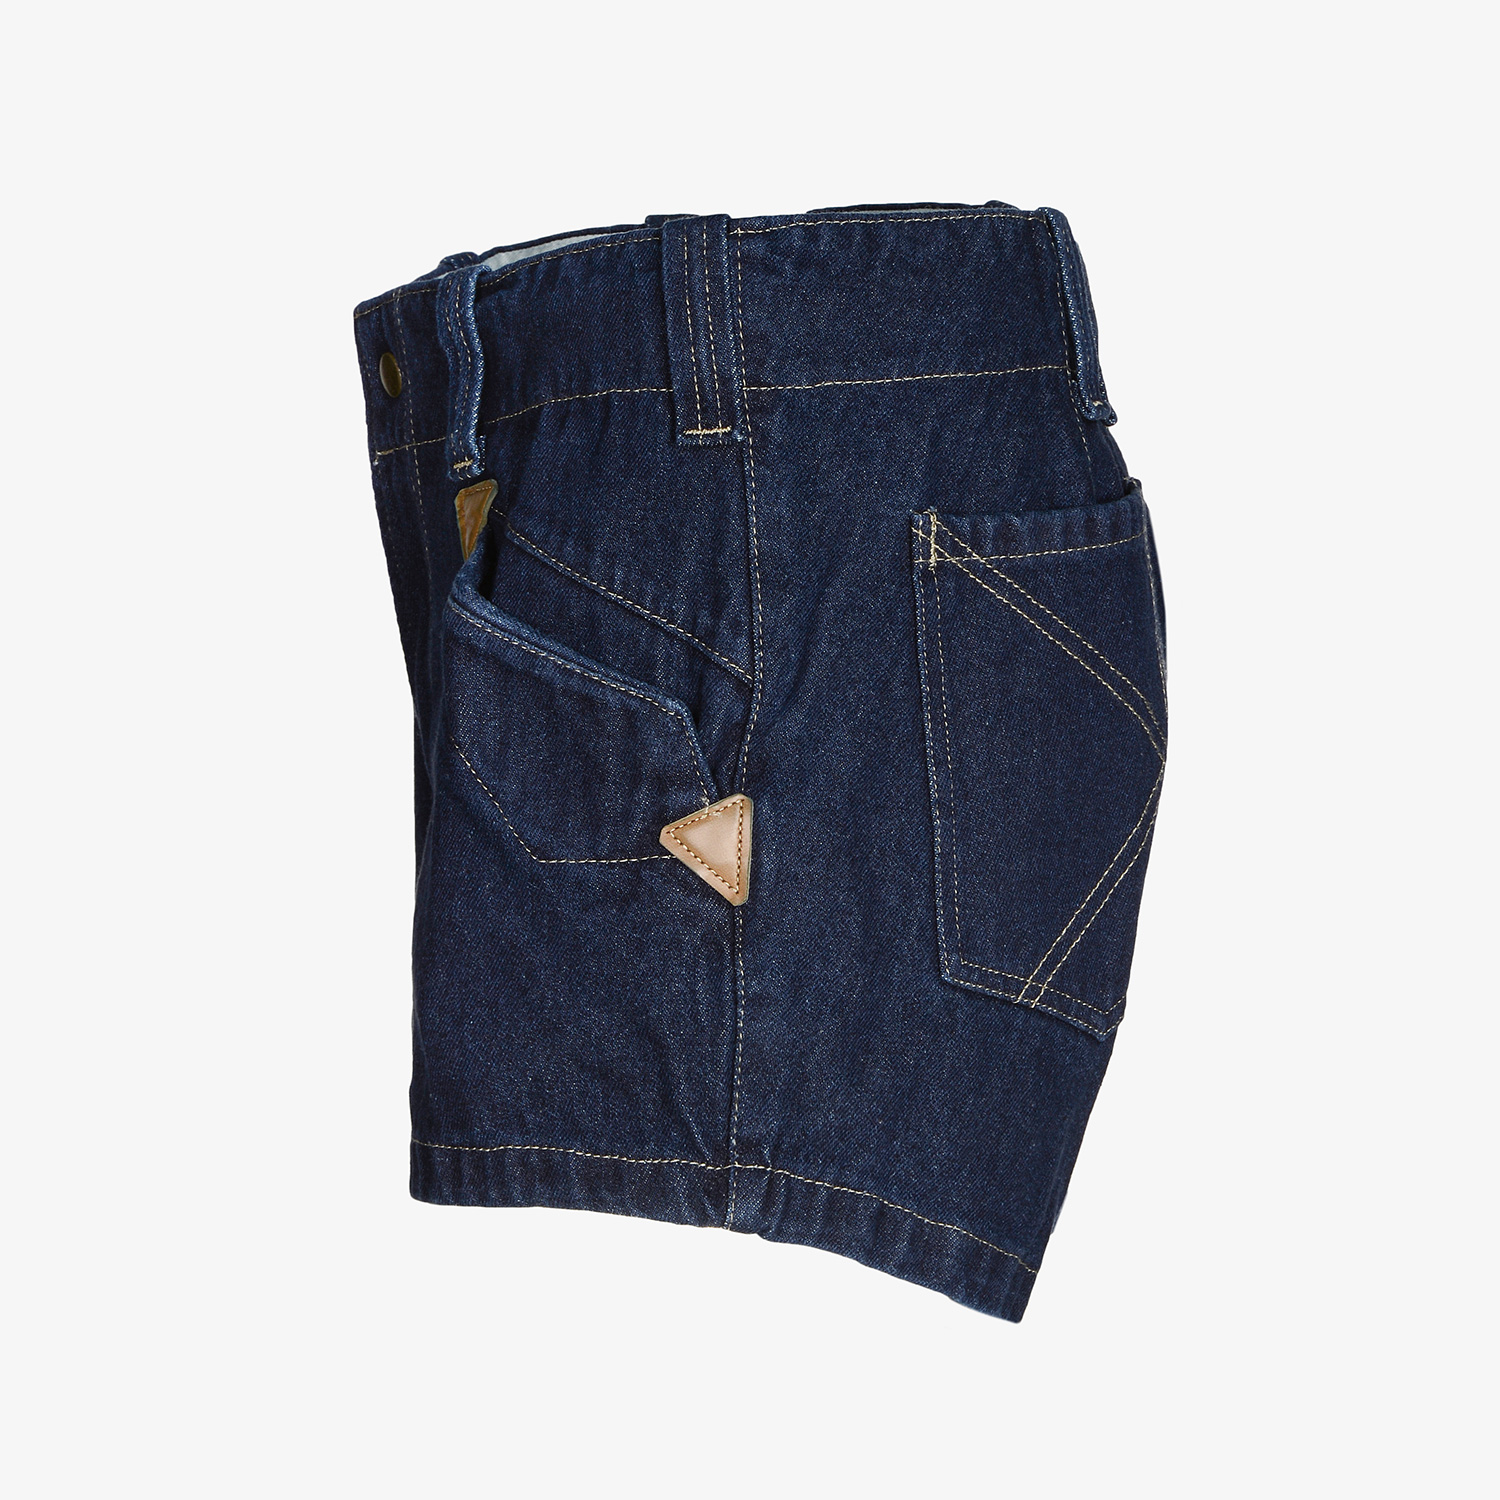 KRÄHE Jeans short